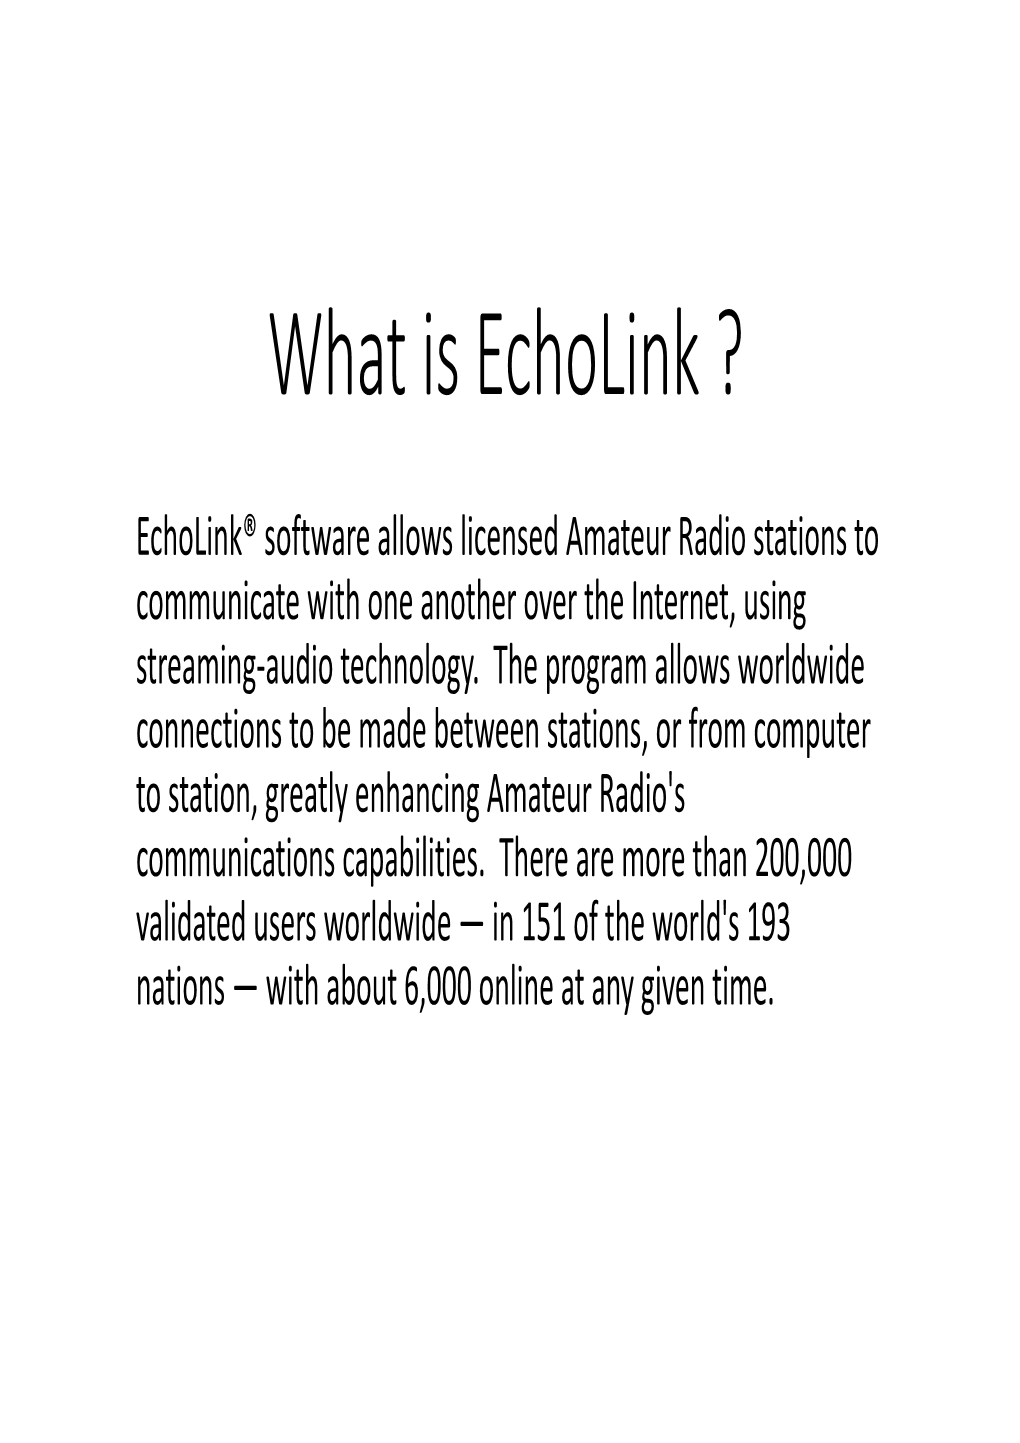 Echolink Presentation.Pptx